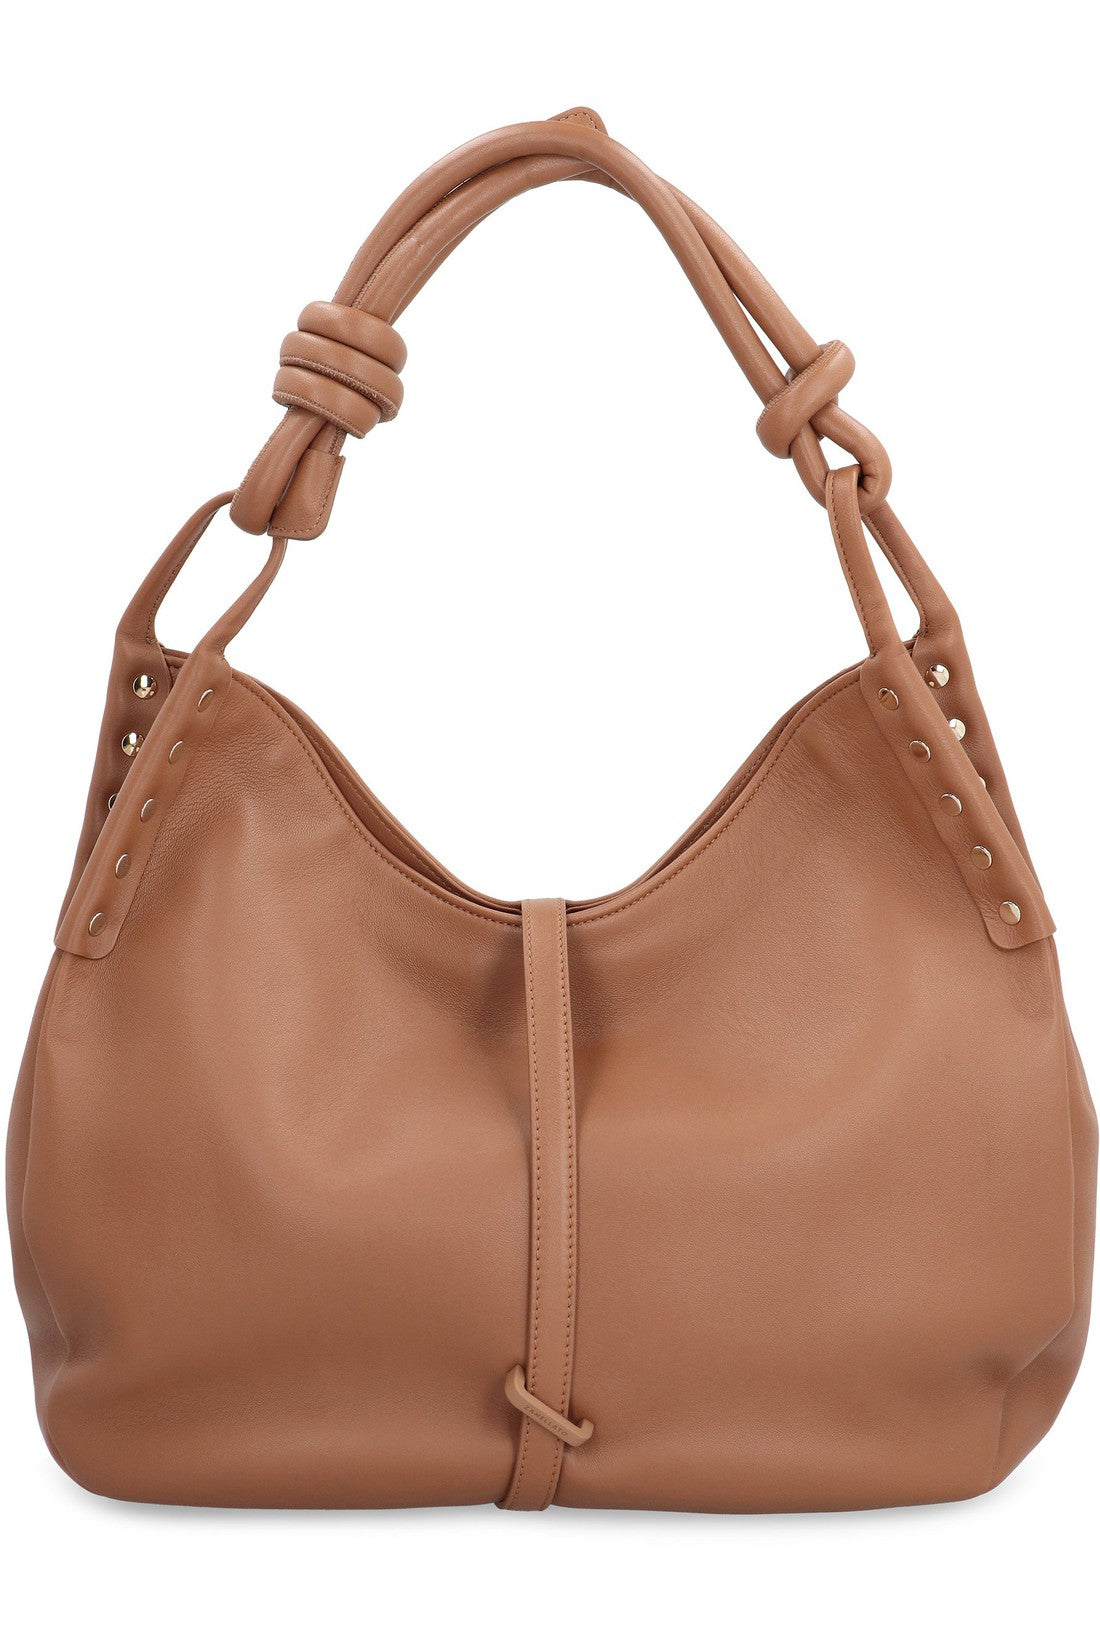 Zanellato-OUTLET-SALE-Ima leather shoulder bag-ARCHIVIST